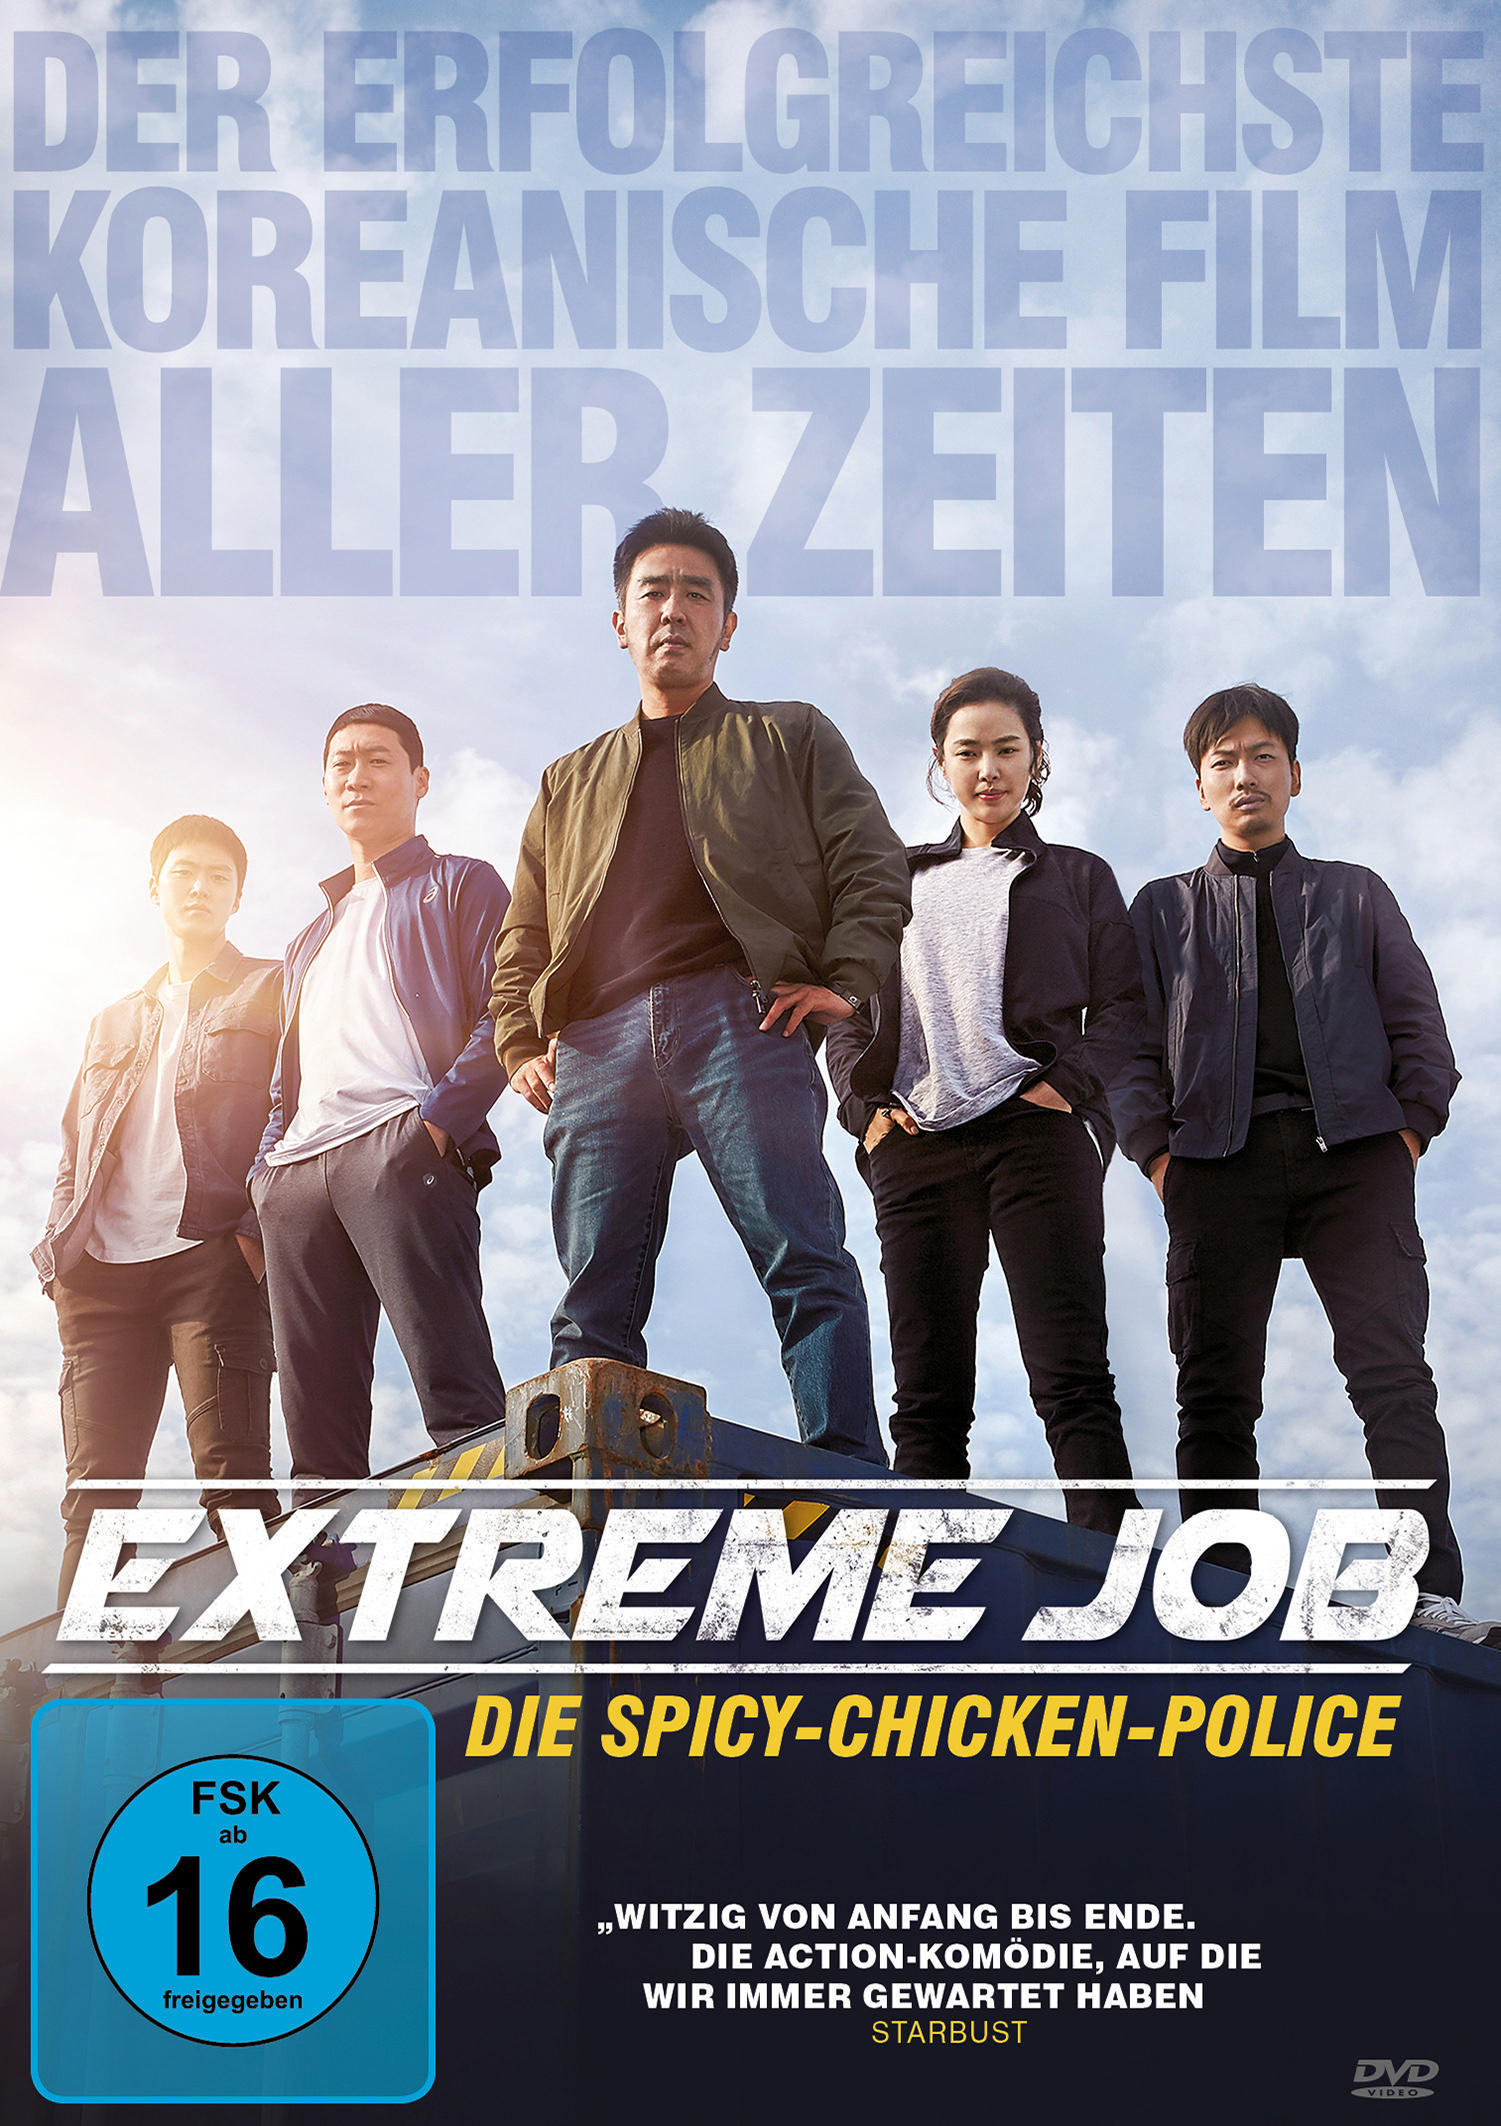 Spicy-Chicken-Police Job - DVD Extreme